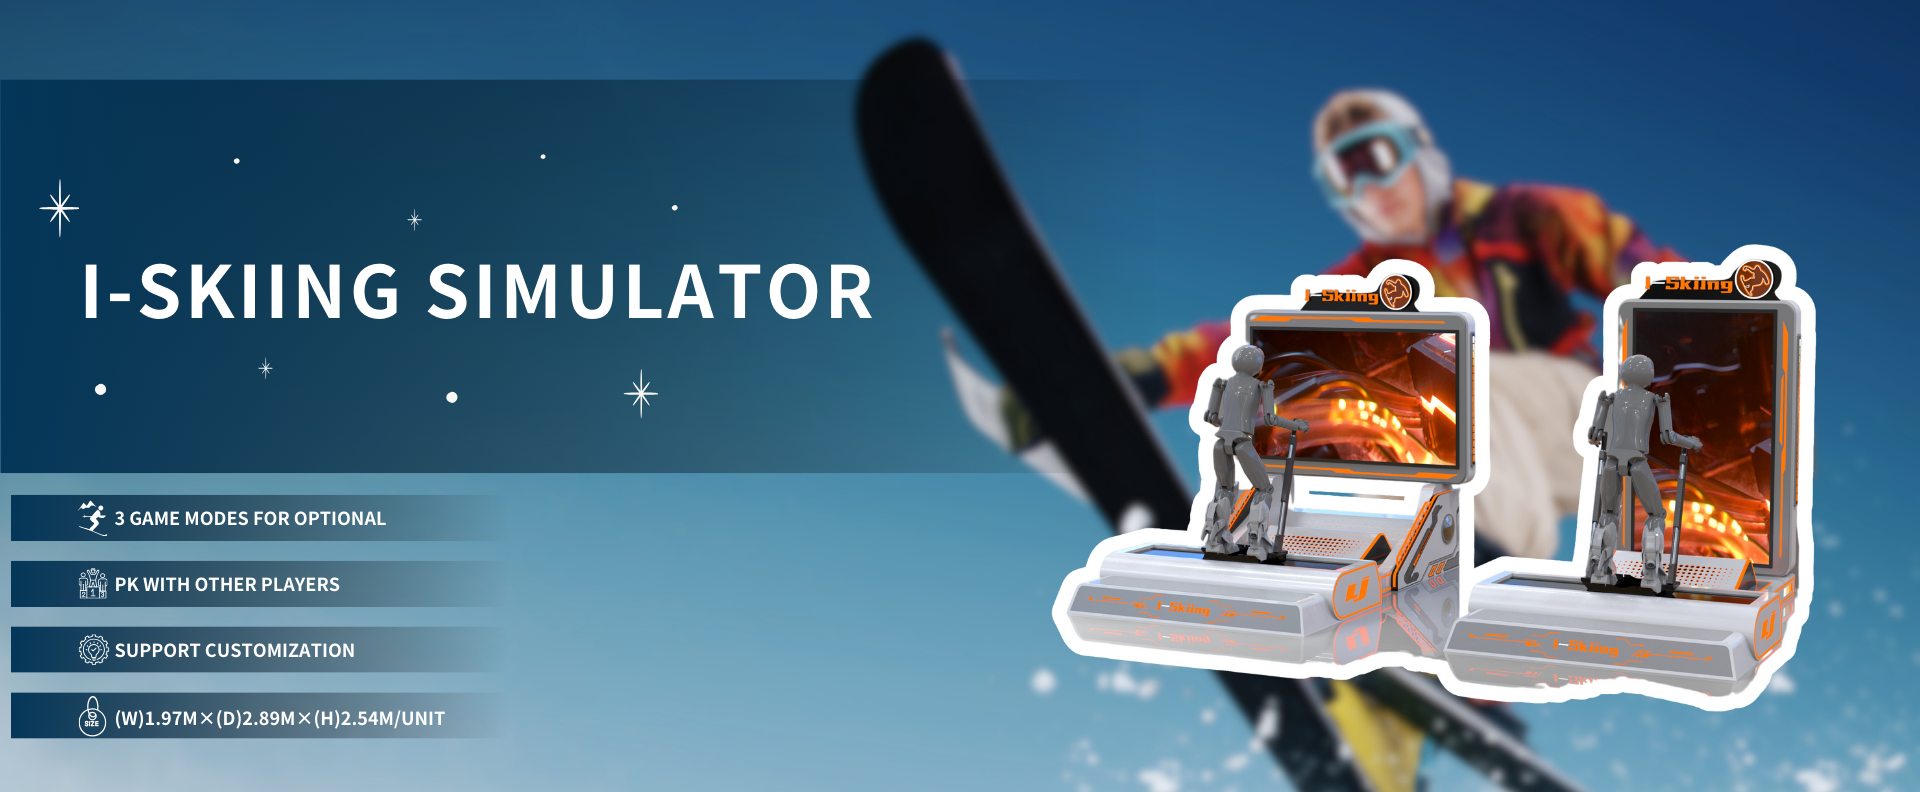 Skiing-simulation-on-high-tech-simulator